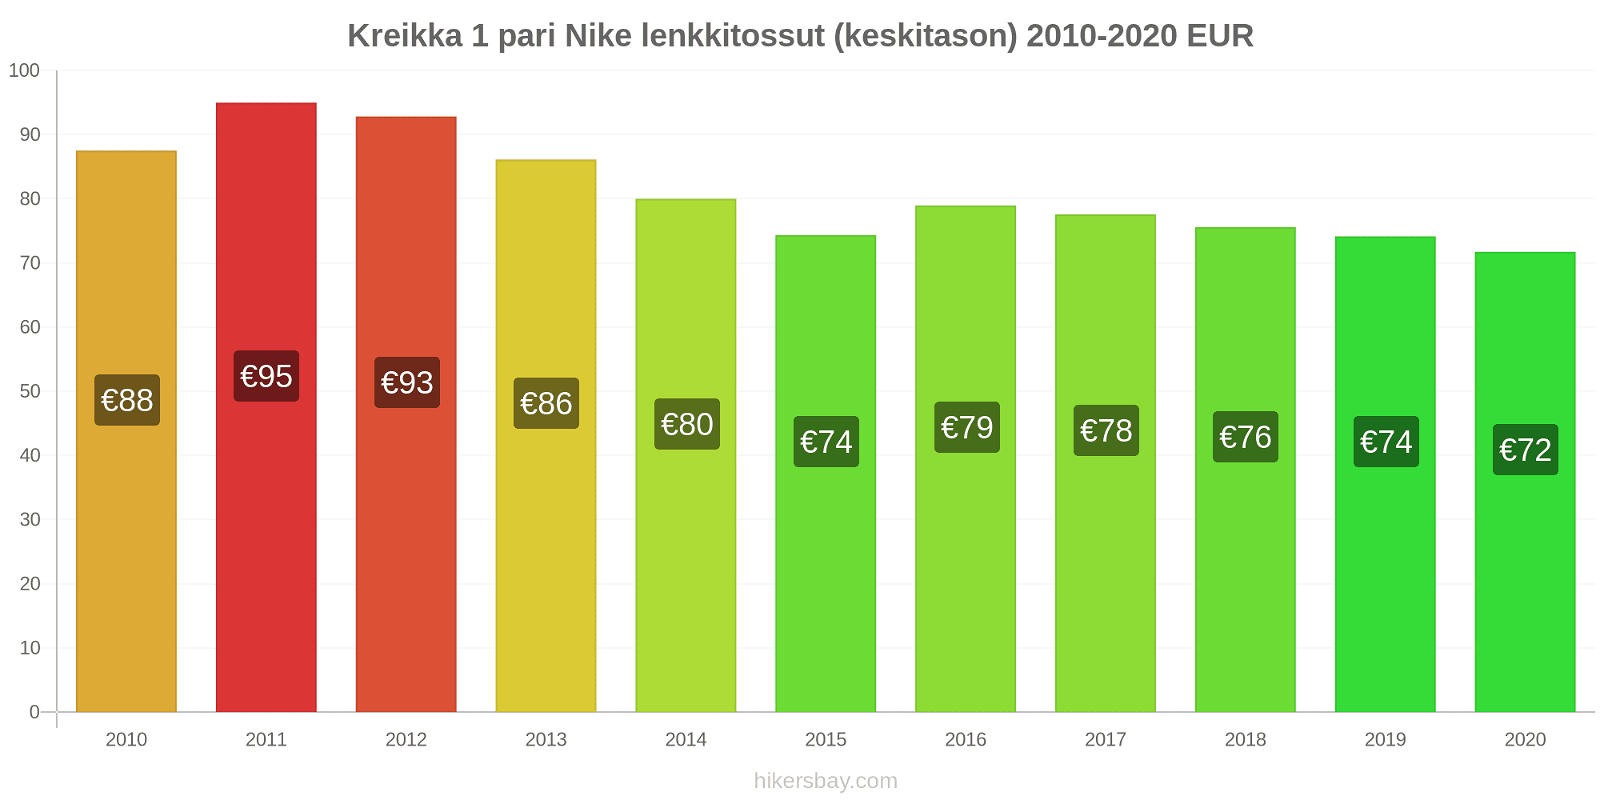 Kreikka hintojen muutokset 1 pari Nike lenkkitossut (keskitason) hikersbay.com